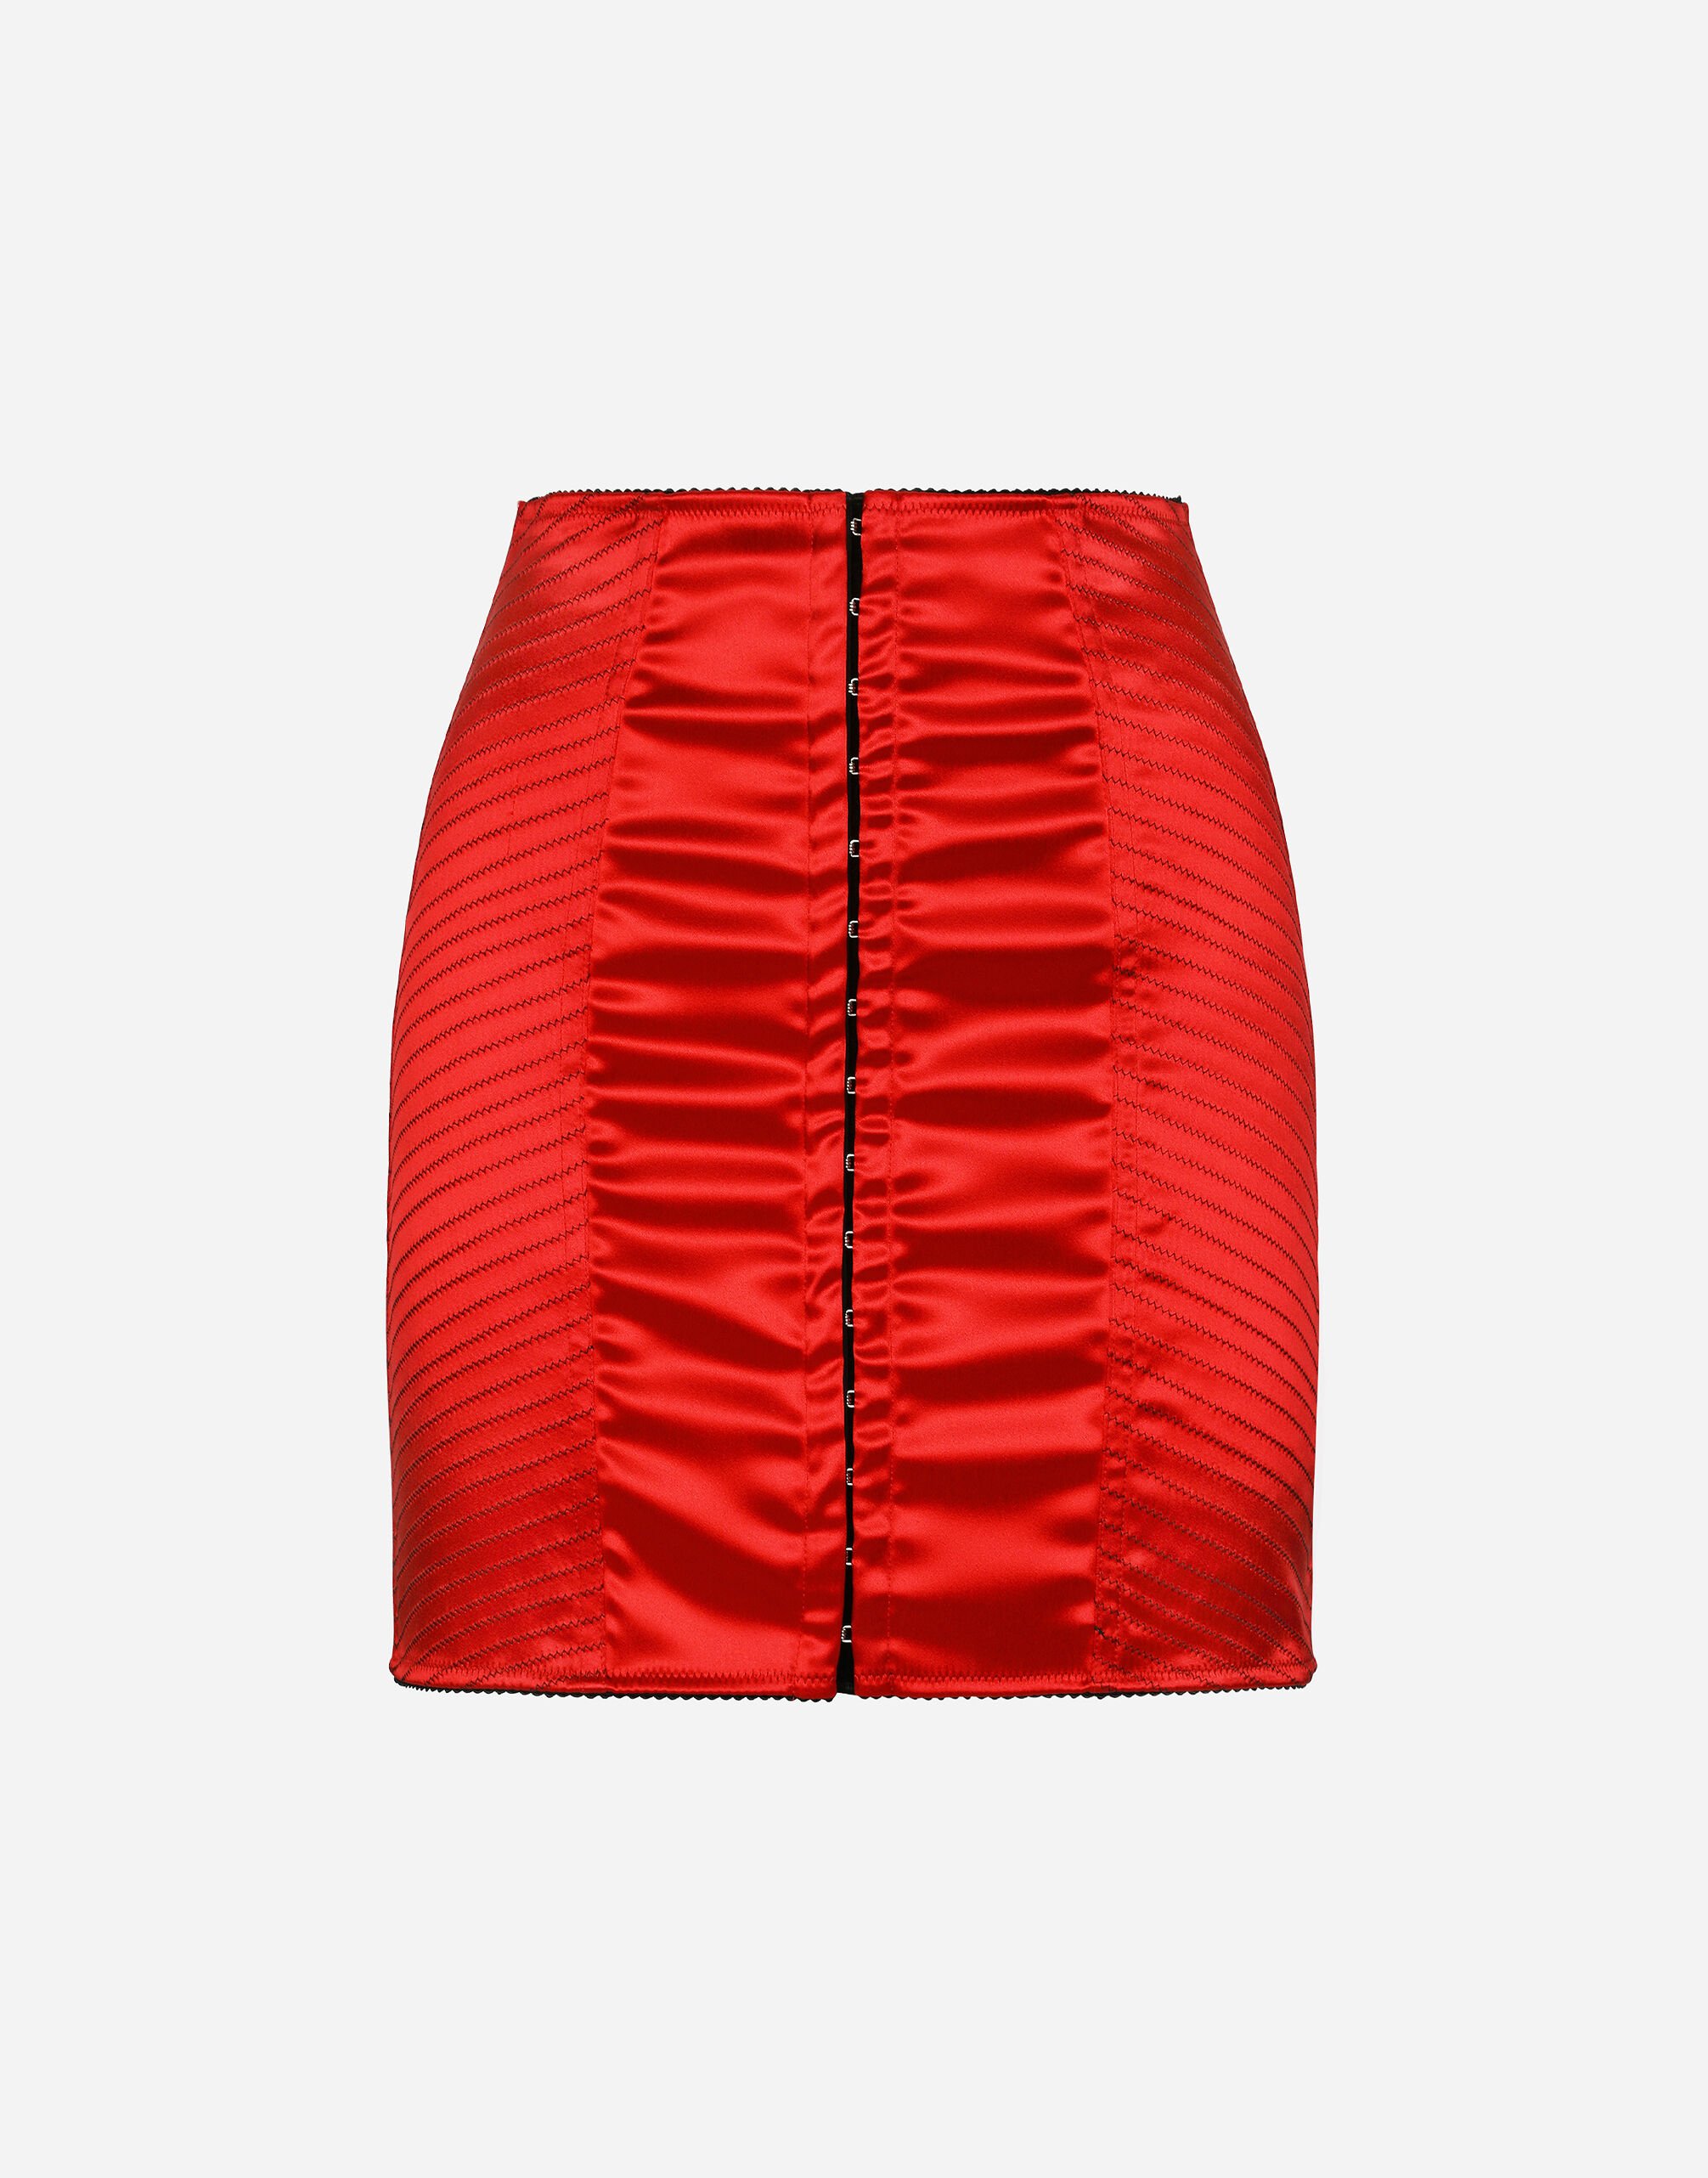 Dolce&Gabbana Satin miniskirt with hook-and-eye fastenings Red F79BUTFURHM